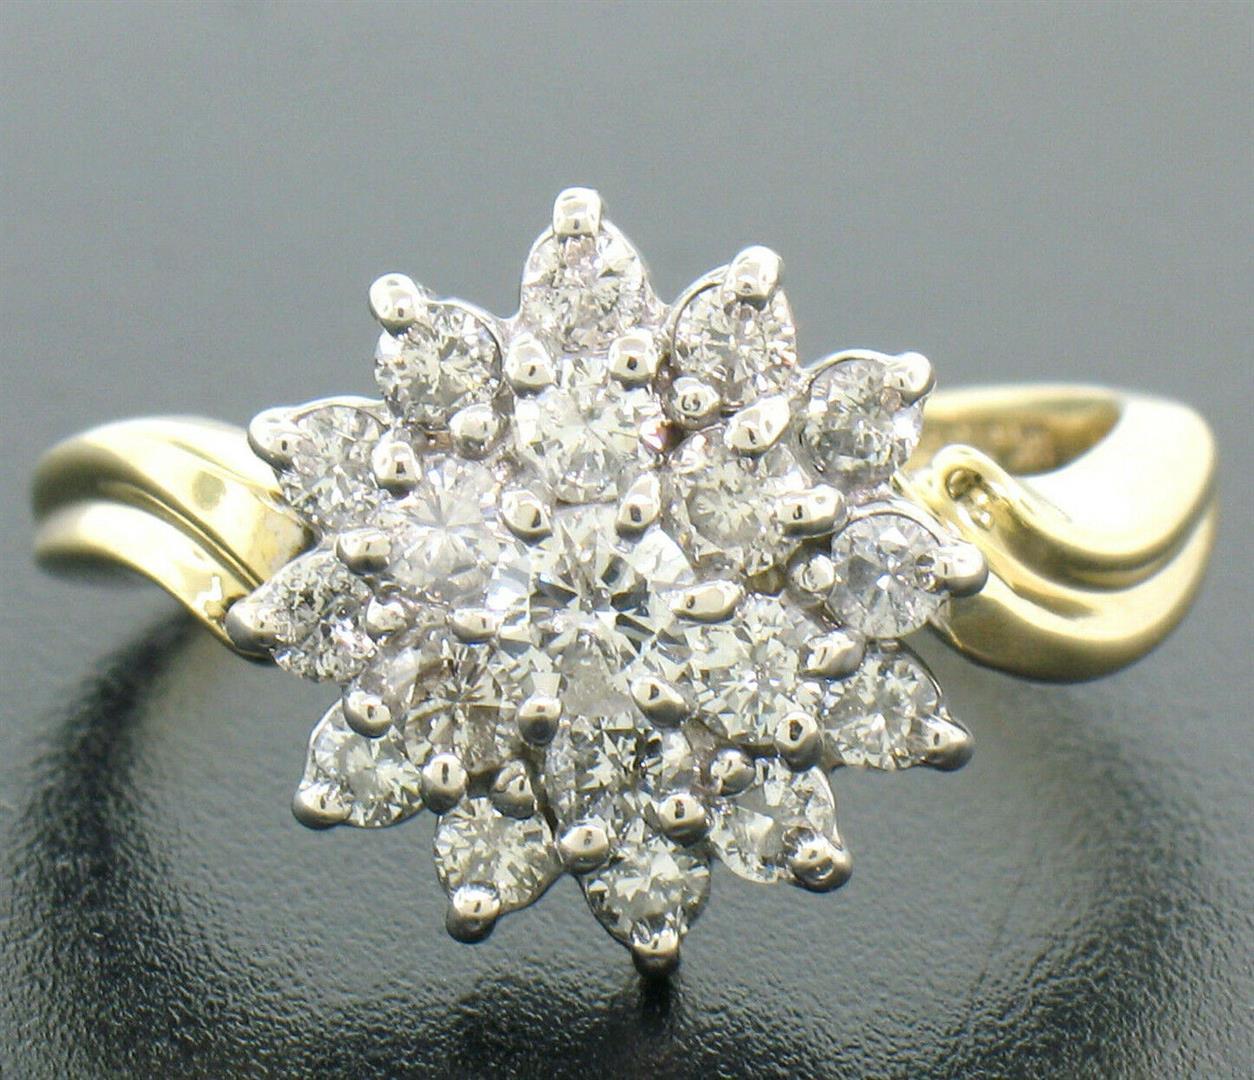 14k Two Tone Gold 1.10 ctw Round Diamond Flower Cluster Ring w/ Wavy Shank